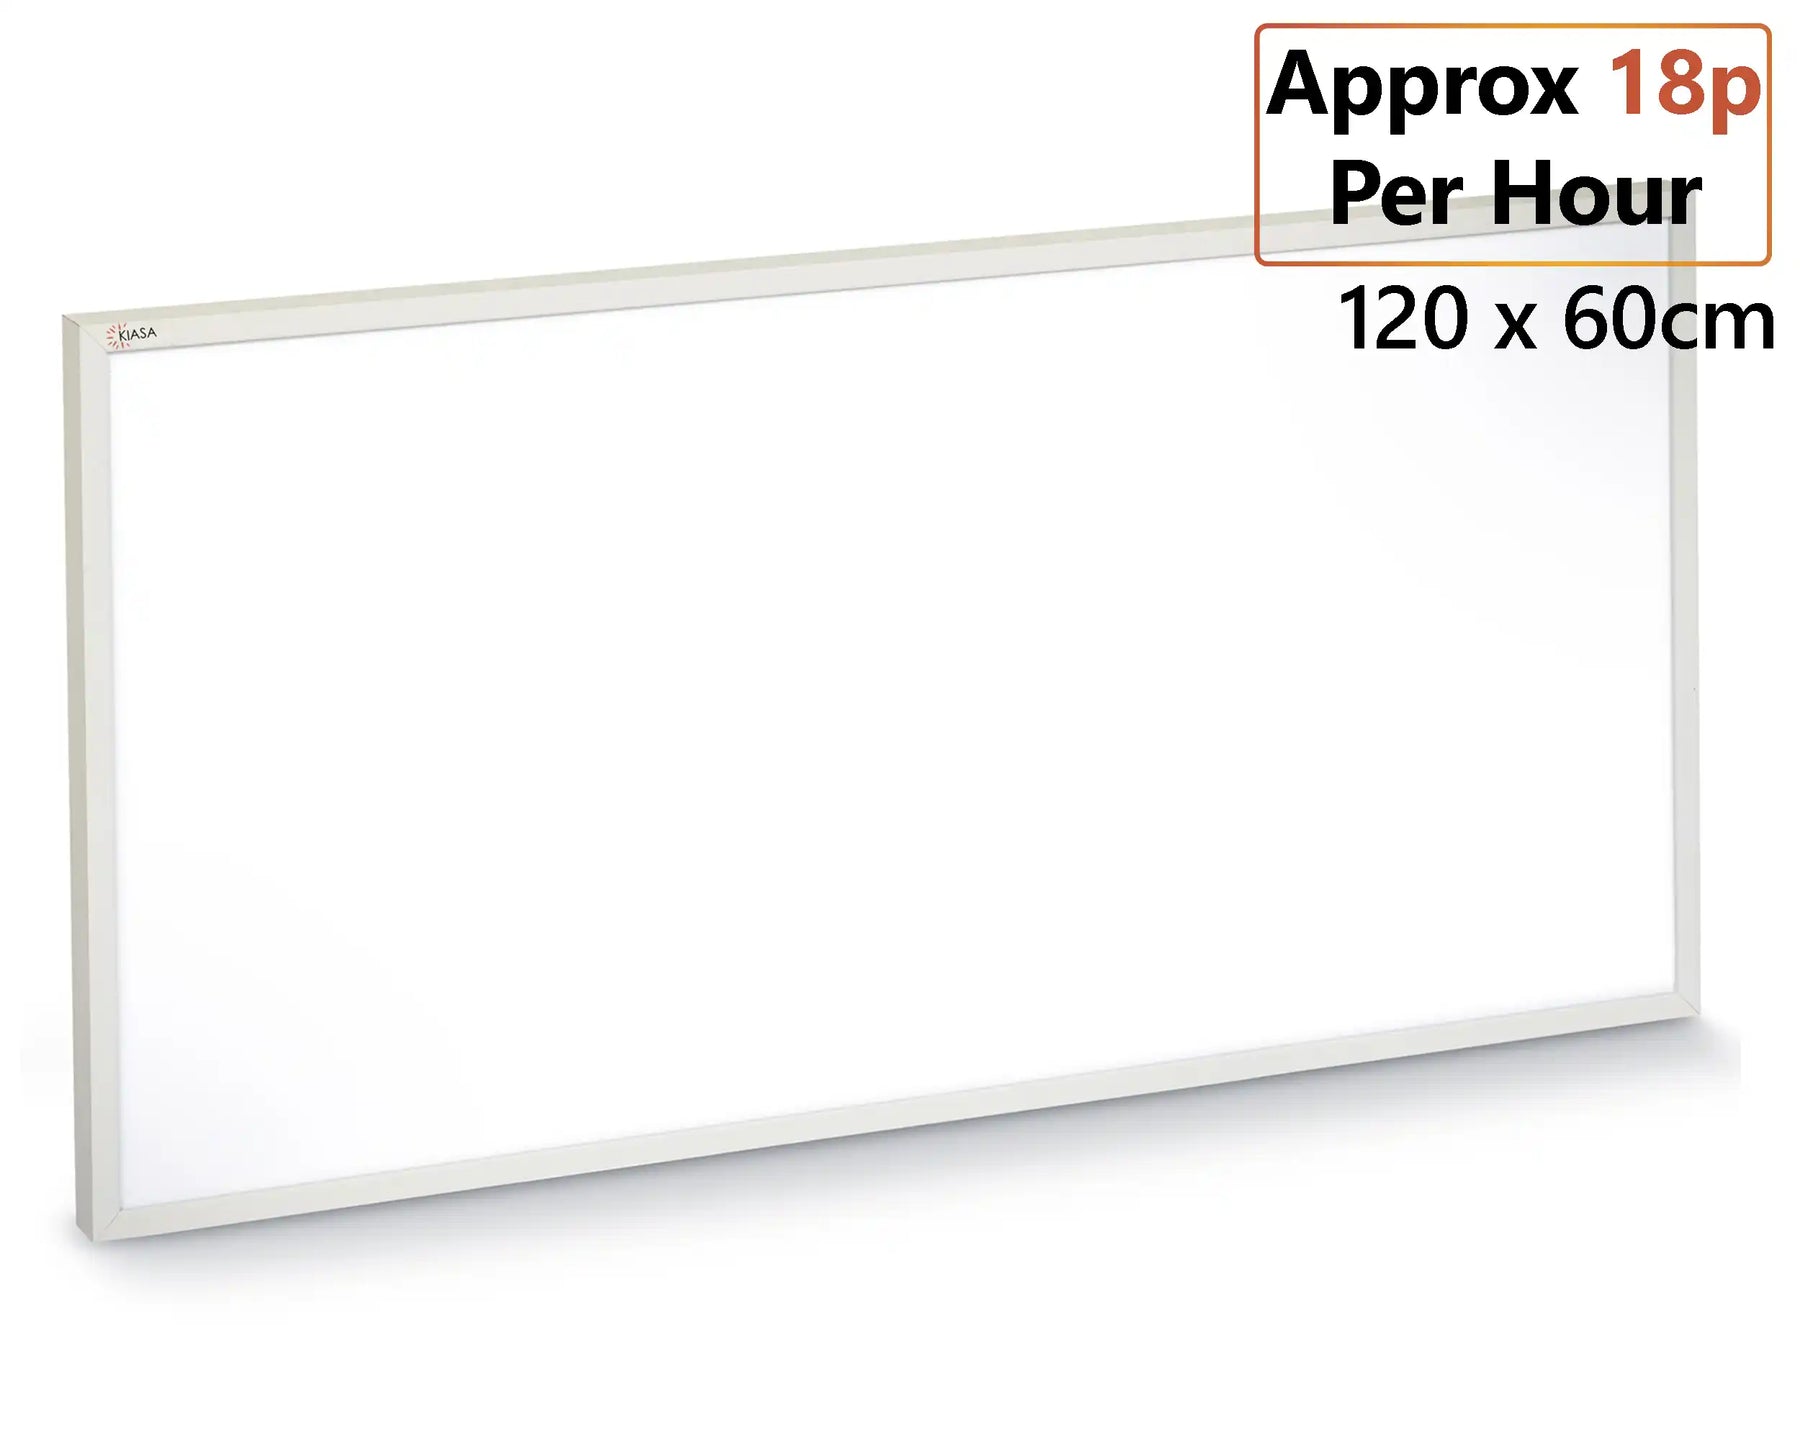 720W Kiasa Infrared Heating Panel - 120cm x 60cm - 18P Per hour 